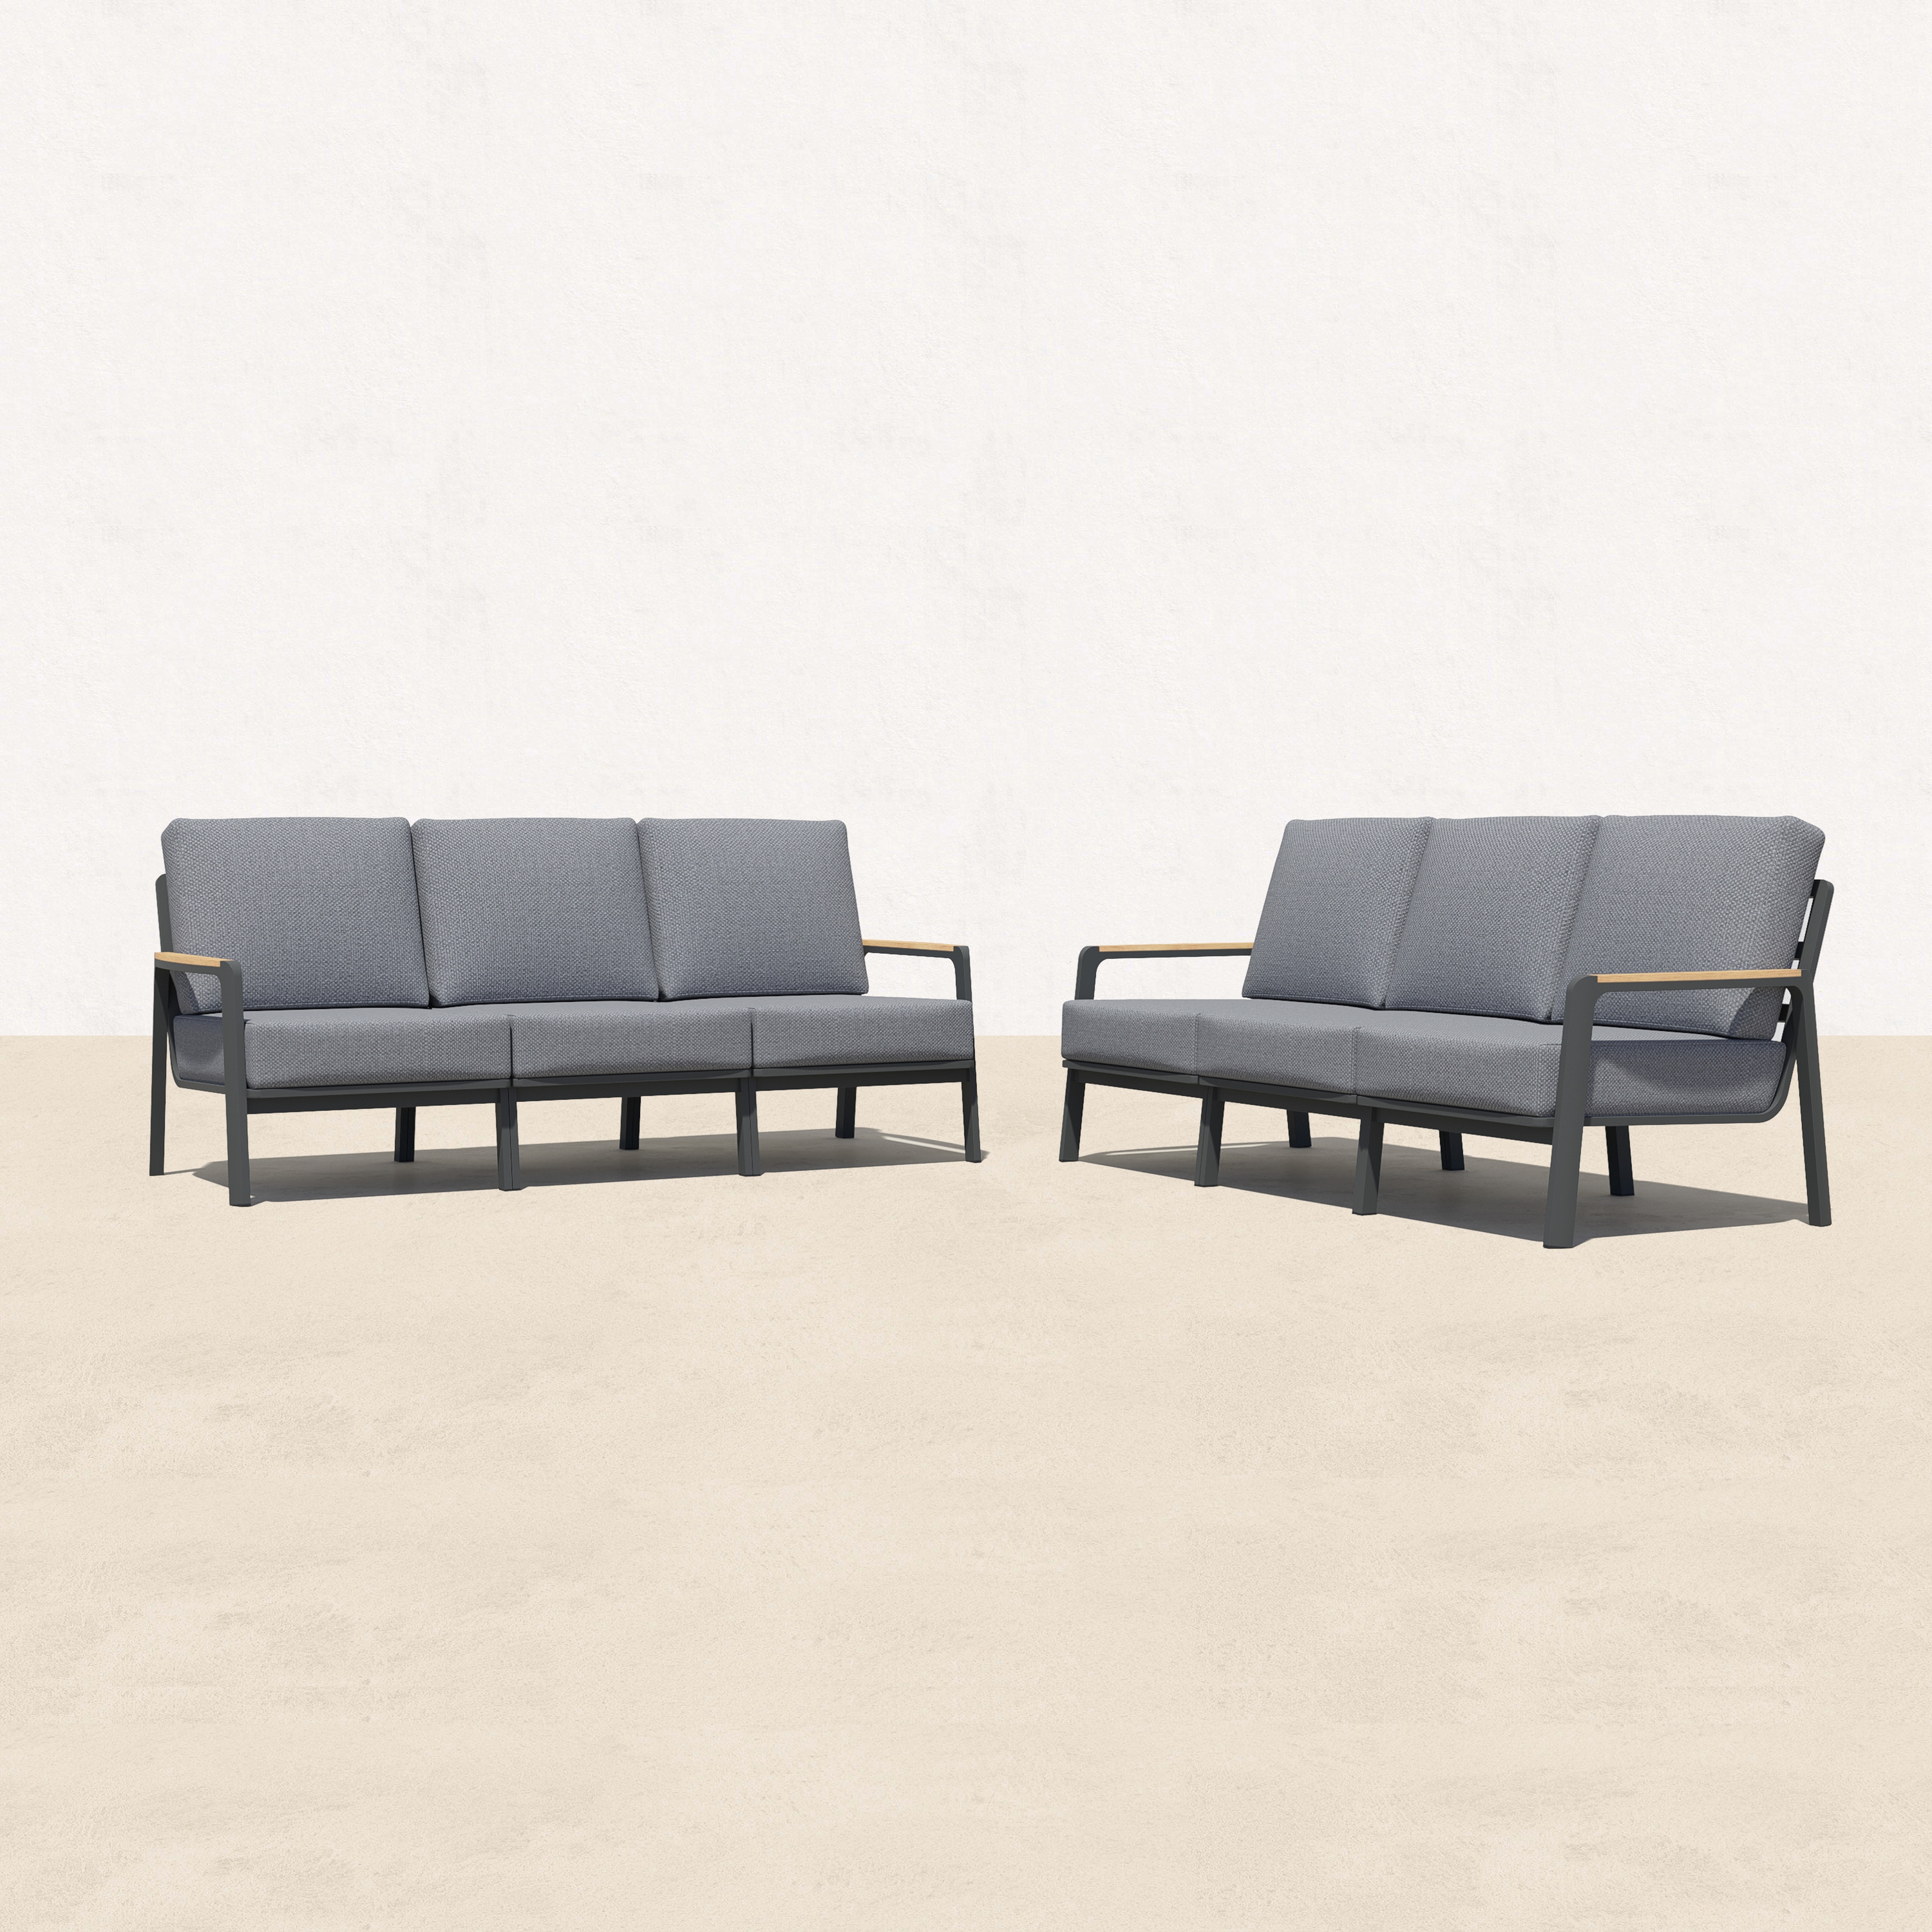 Orion Teak Outdoor Sofa Conversation Set- 6 Seat-Baeryon Furniture